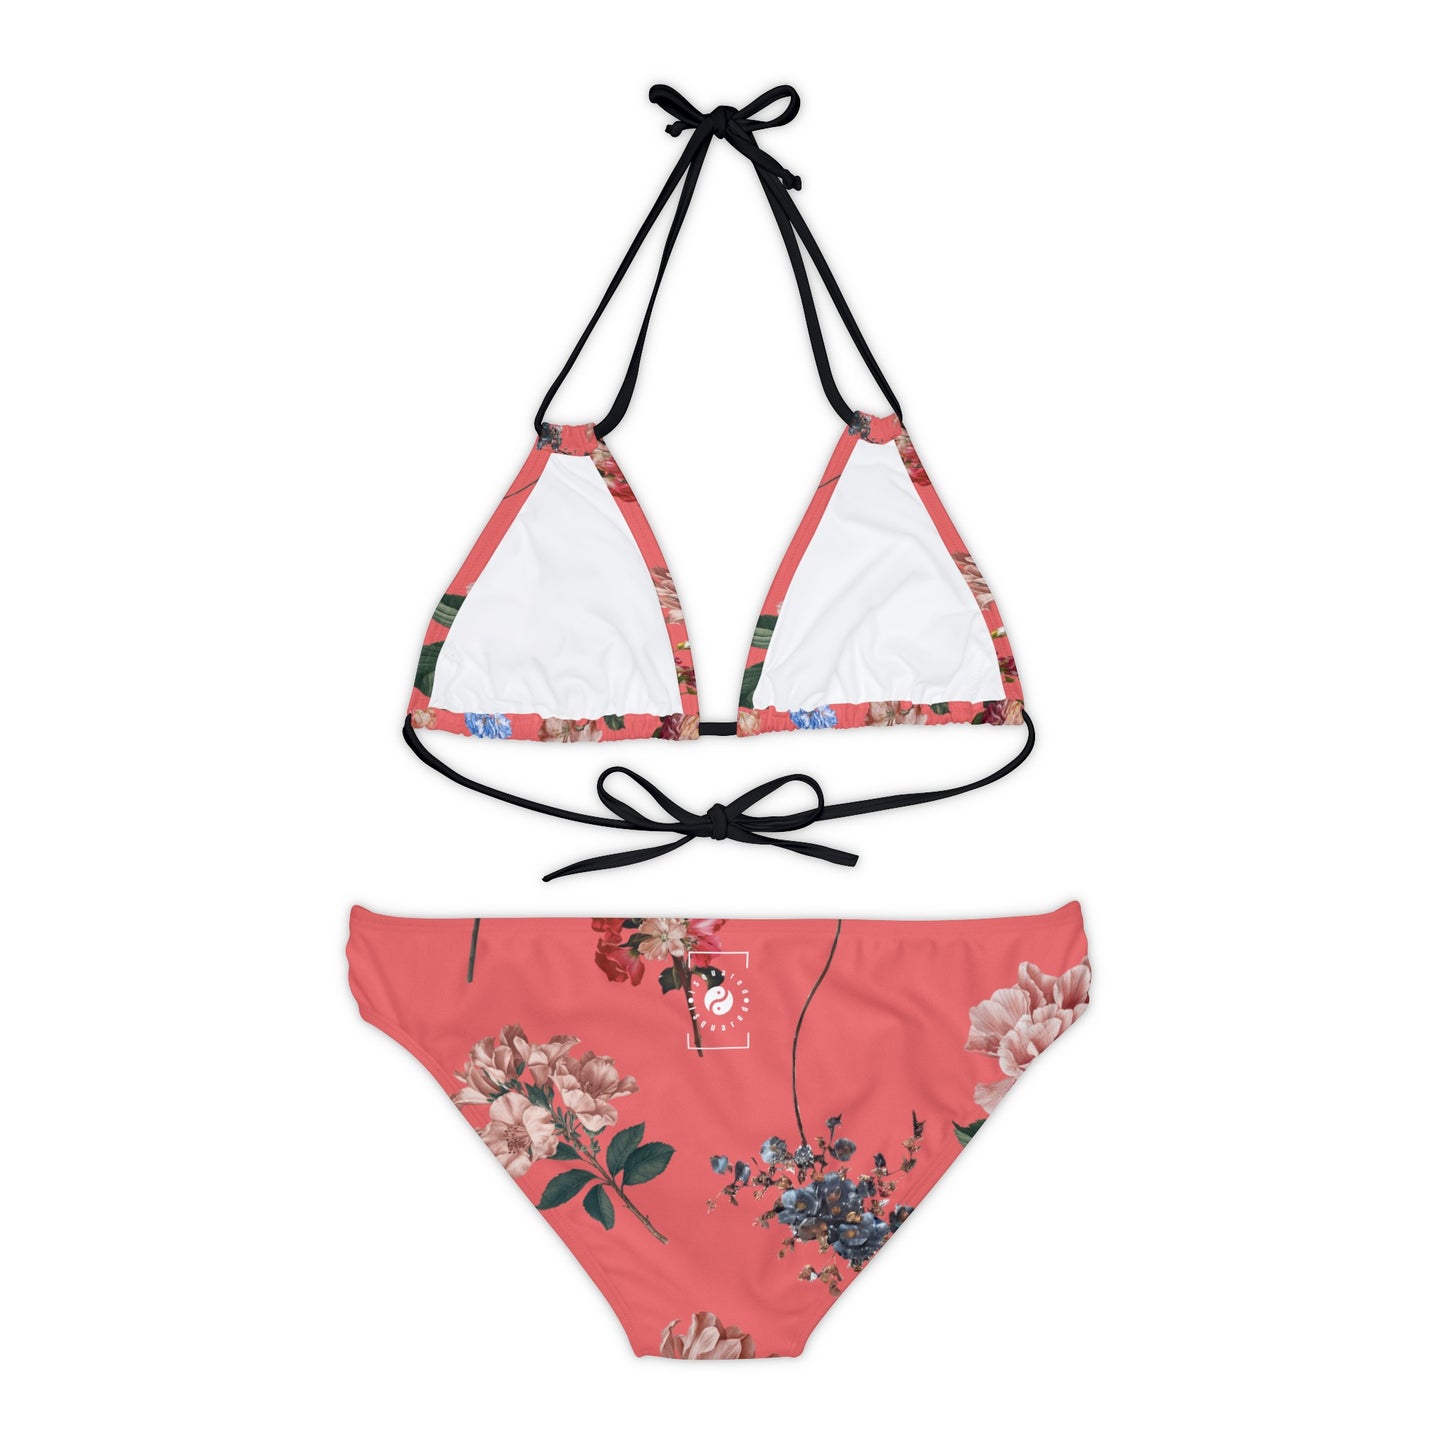 Botanicals on Coral - Lace-up Bikini Set